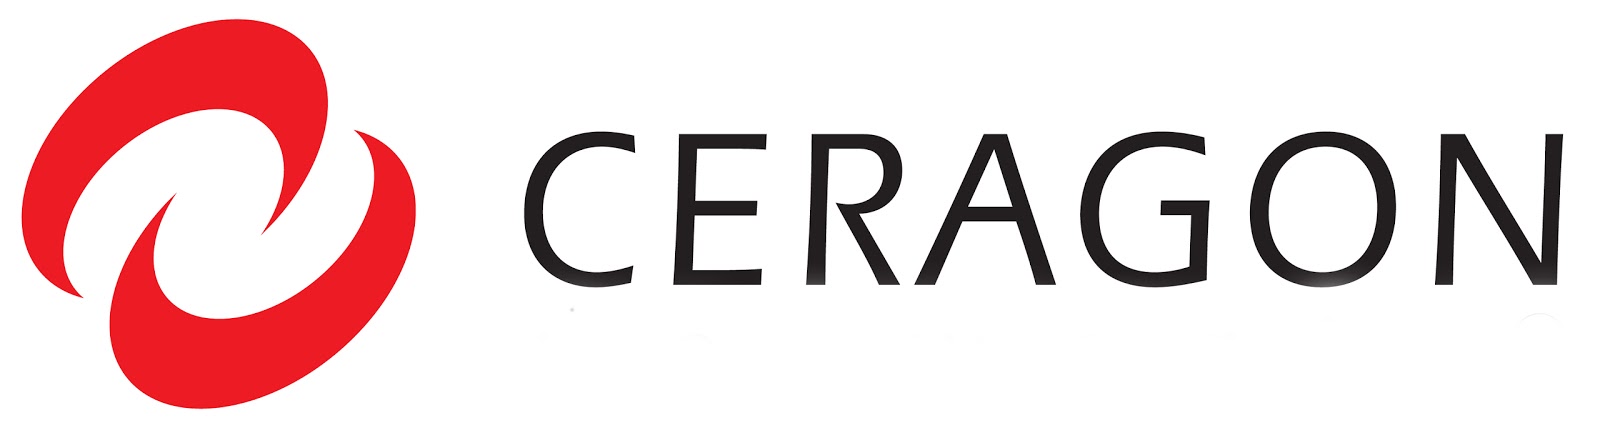 Ceragon Networks Logo photo - 1